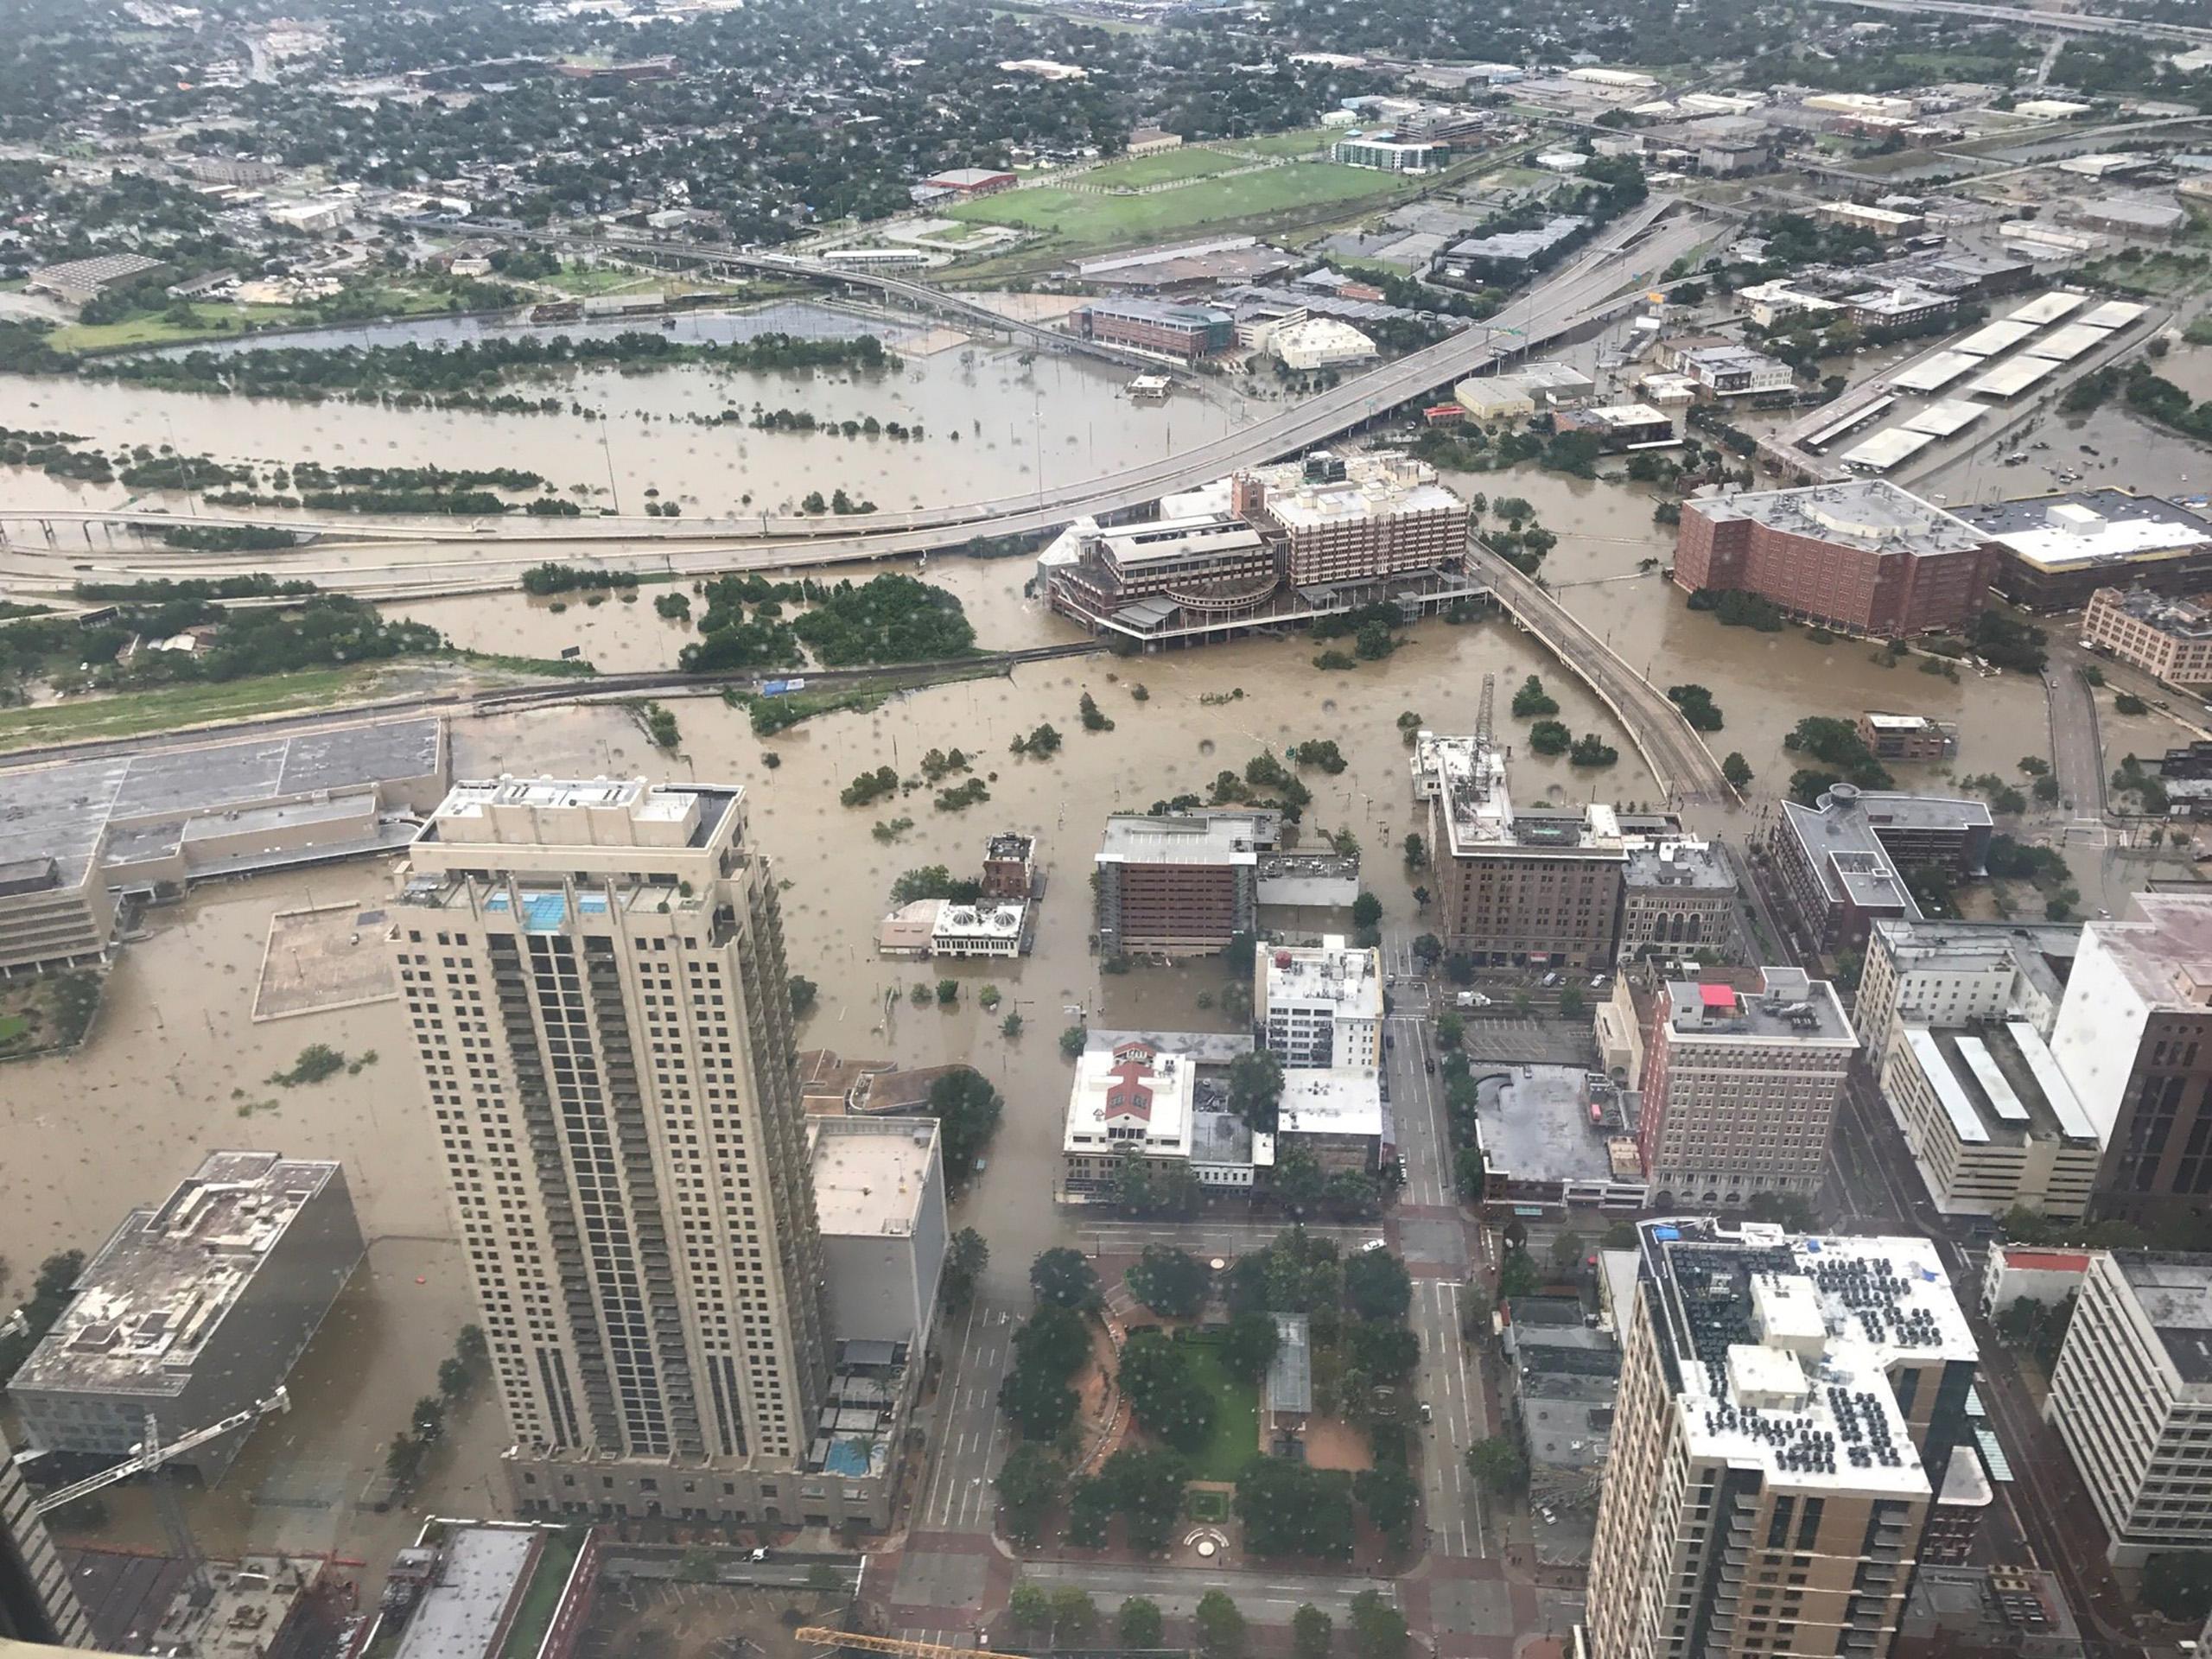 Hurricane Harvey Rebuilding Houston, TX - Week Long Trip March 2020